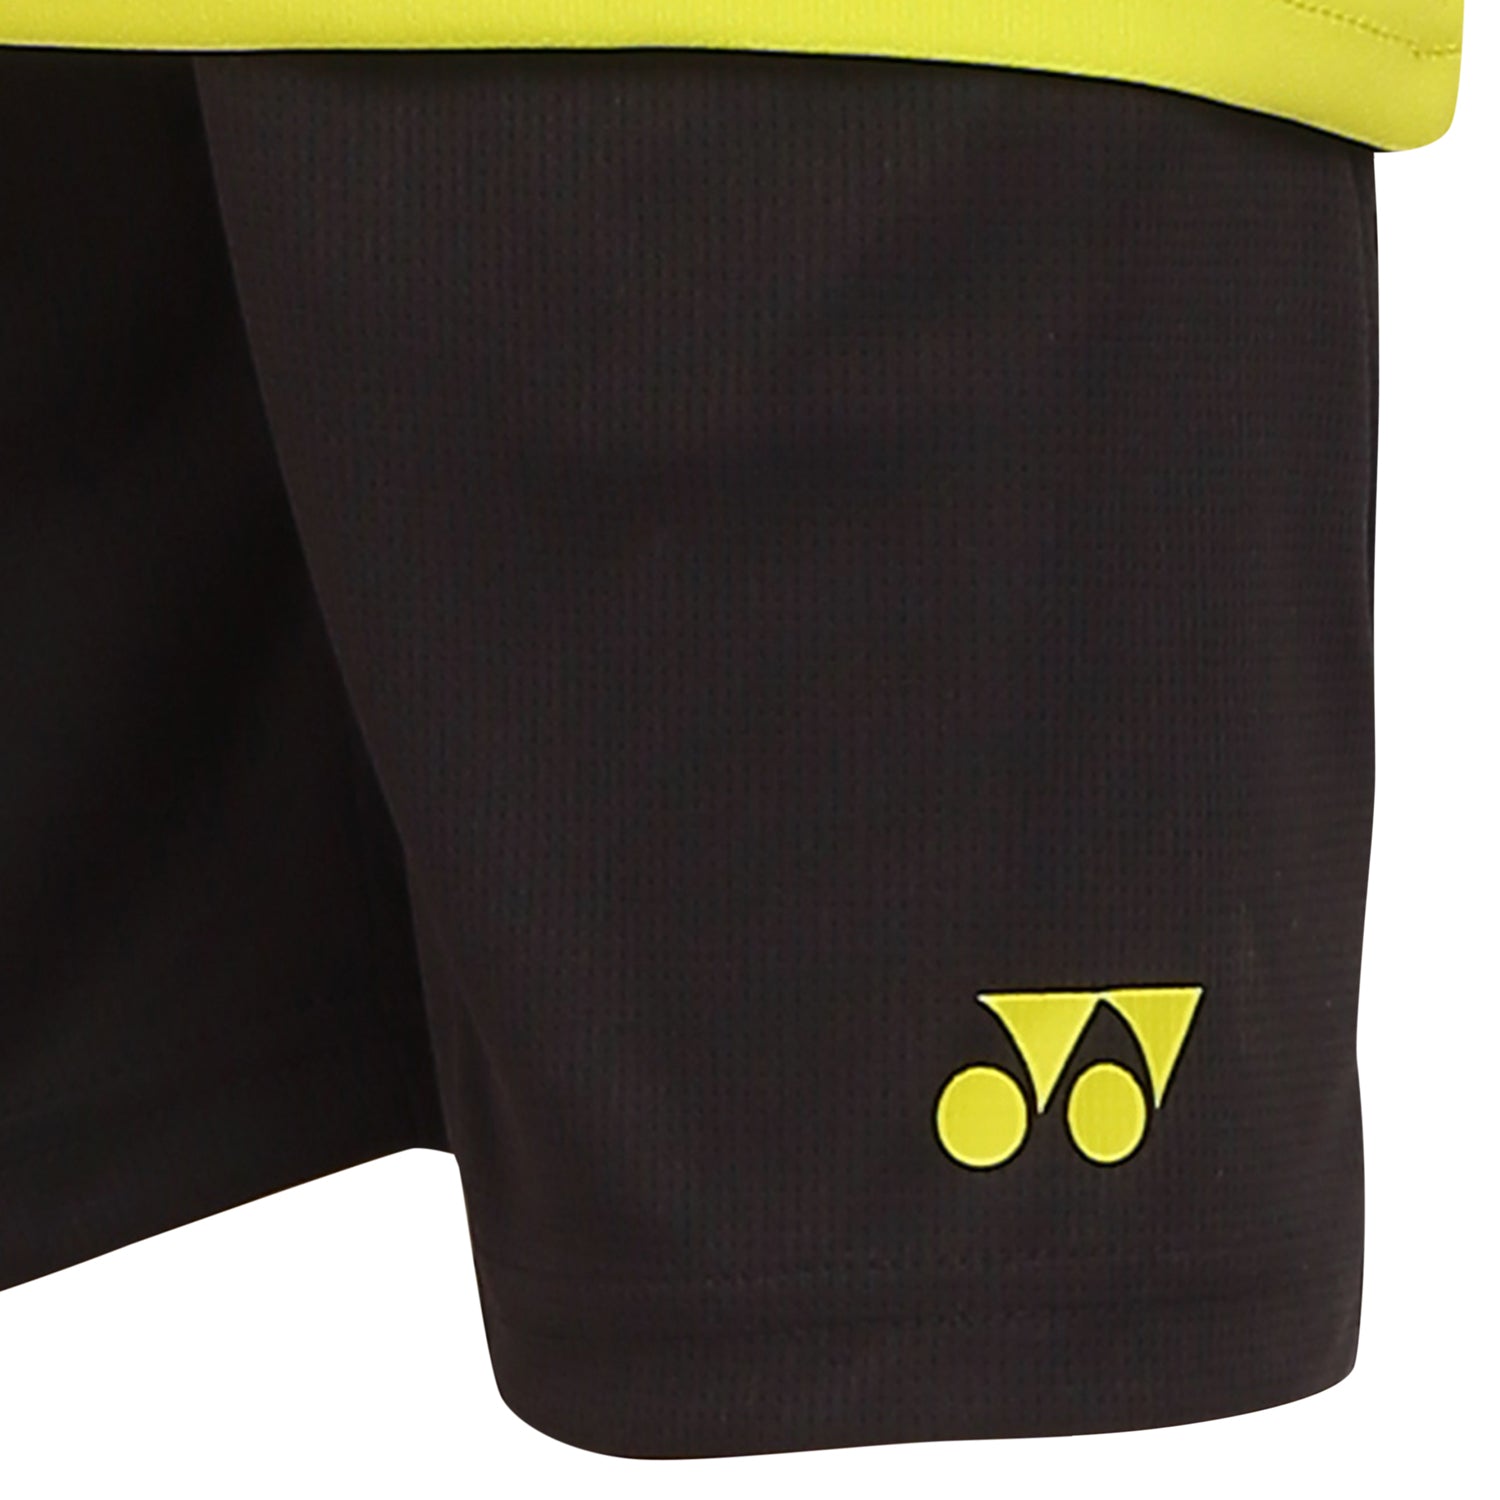 Yonex 1595 Round Neck T-Shirt and Short set for Junior, Lime Punch/Jet Black - Best Price online Prokicksports.com